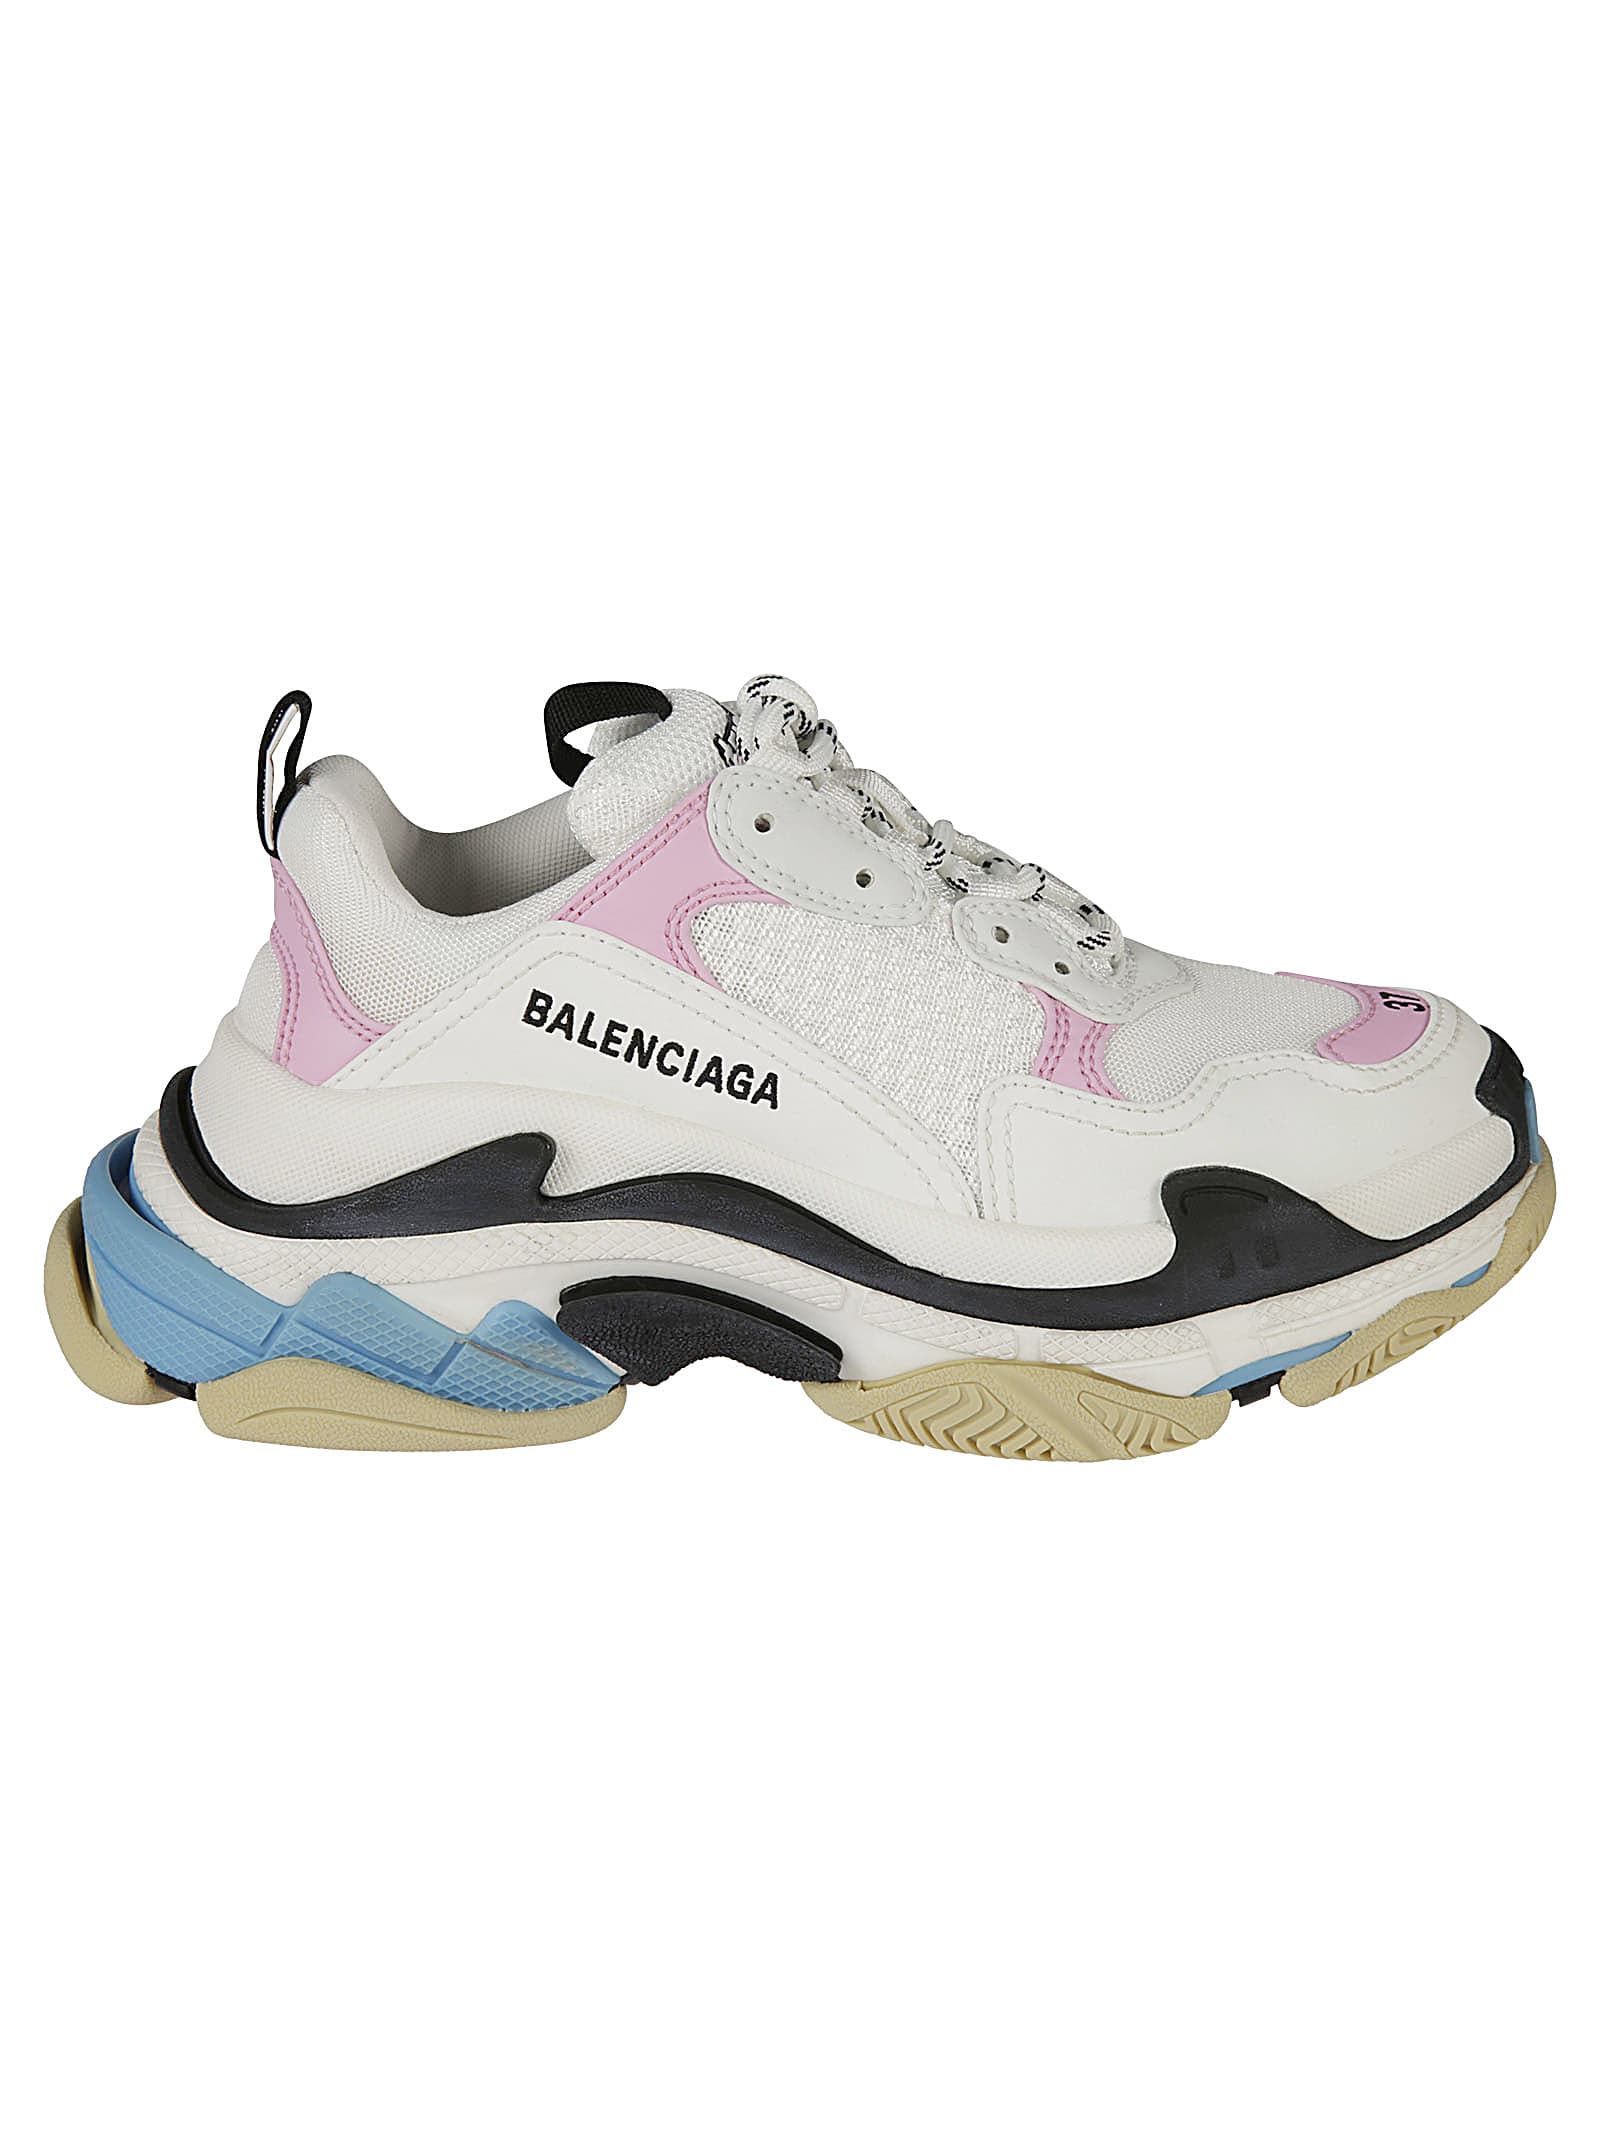 Buy Balenciaga Triple S Sneakers online, shop Balenciaga shoes with free shipping